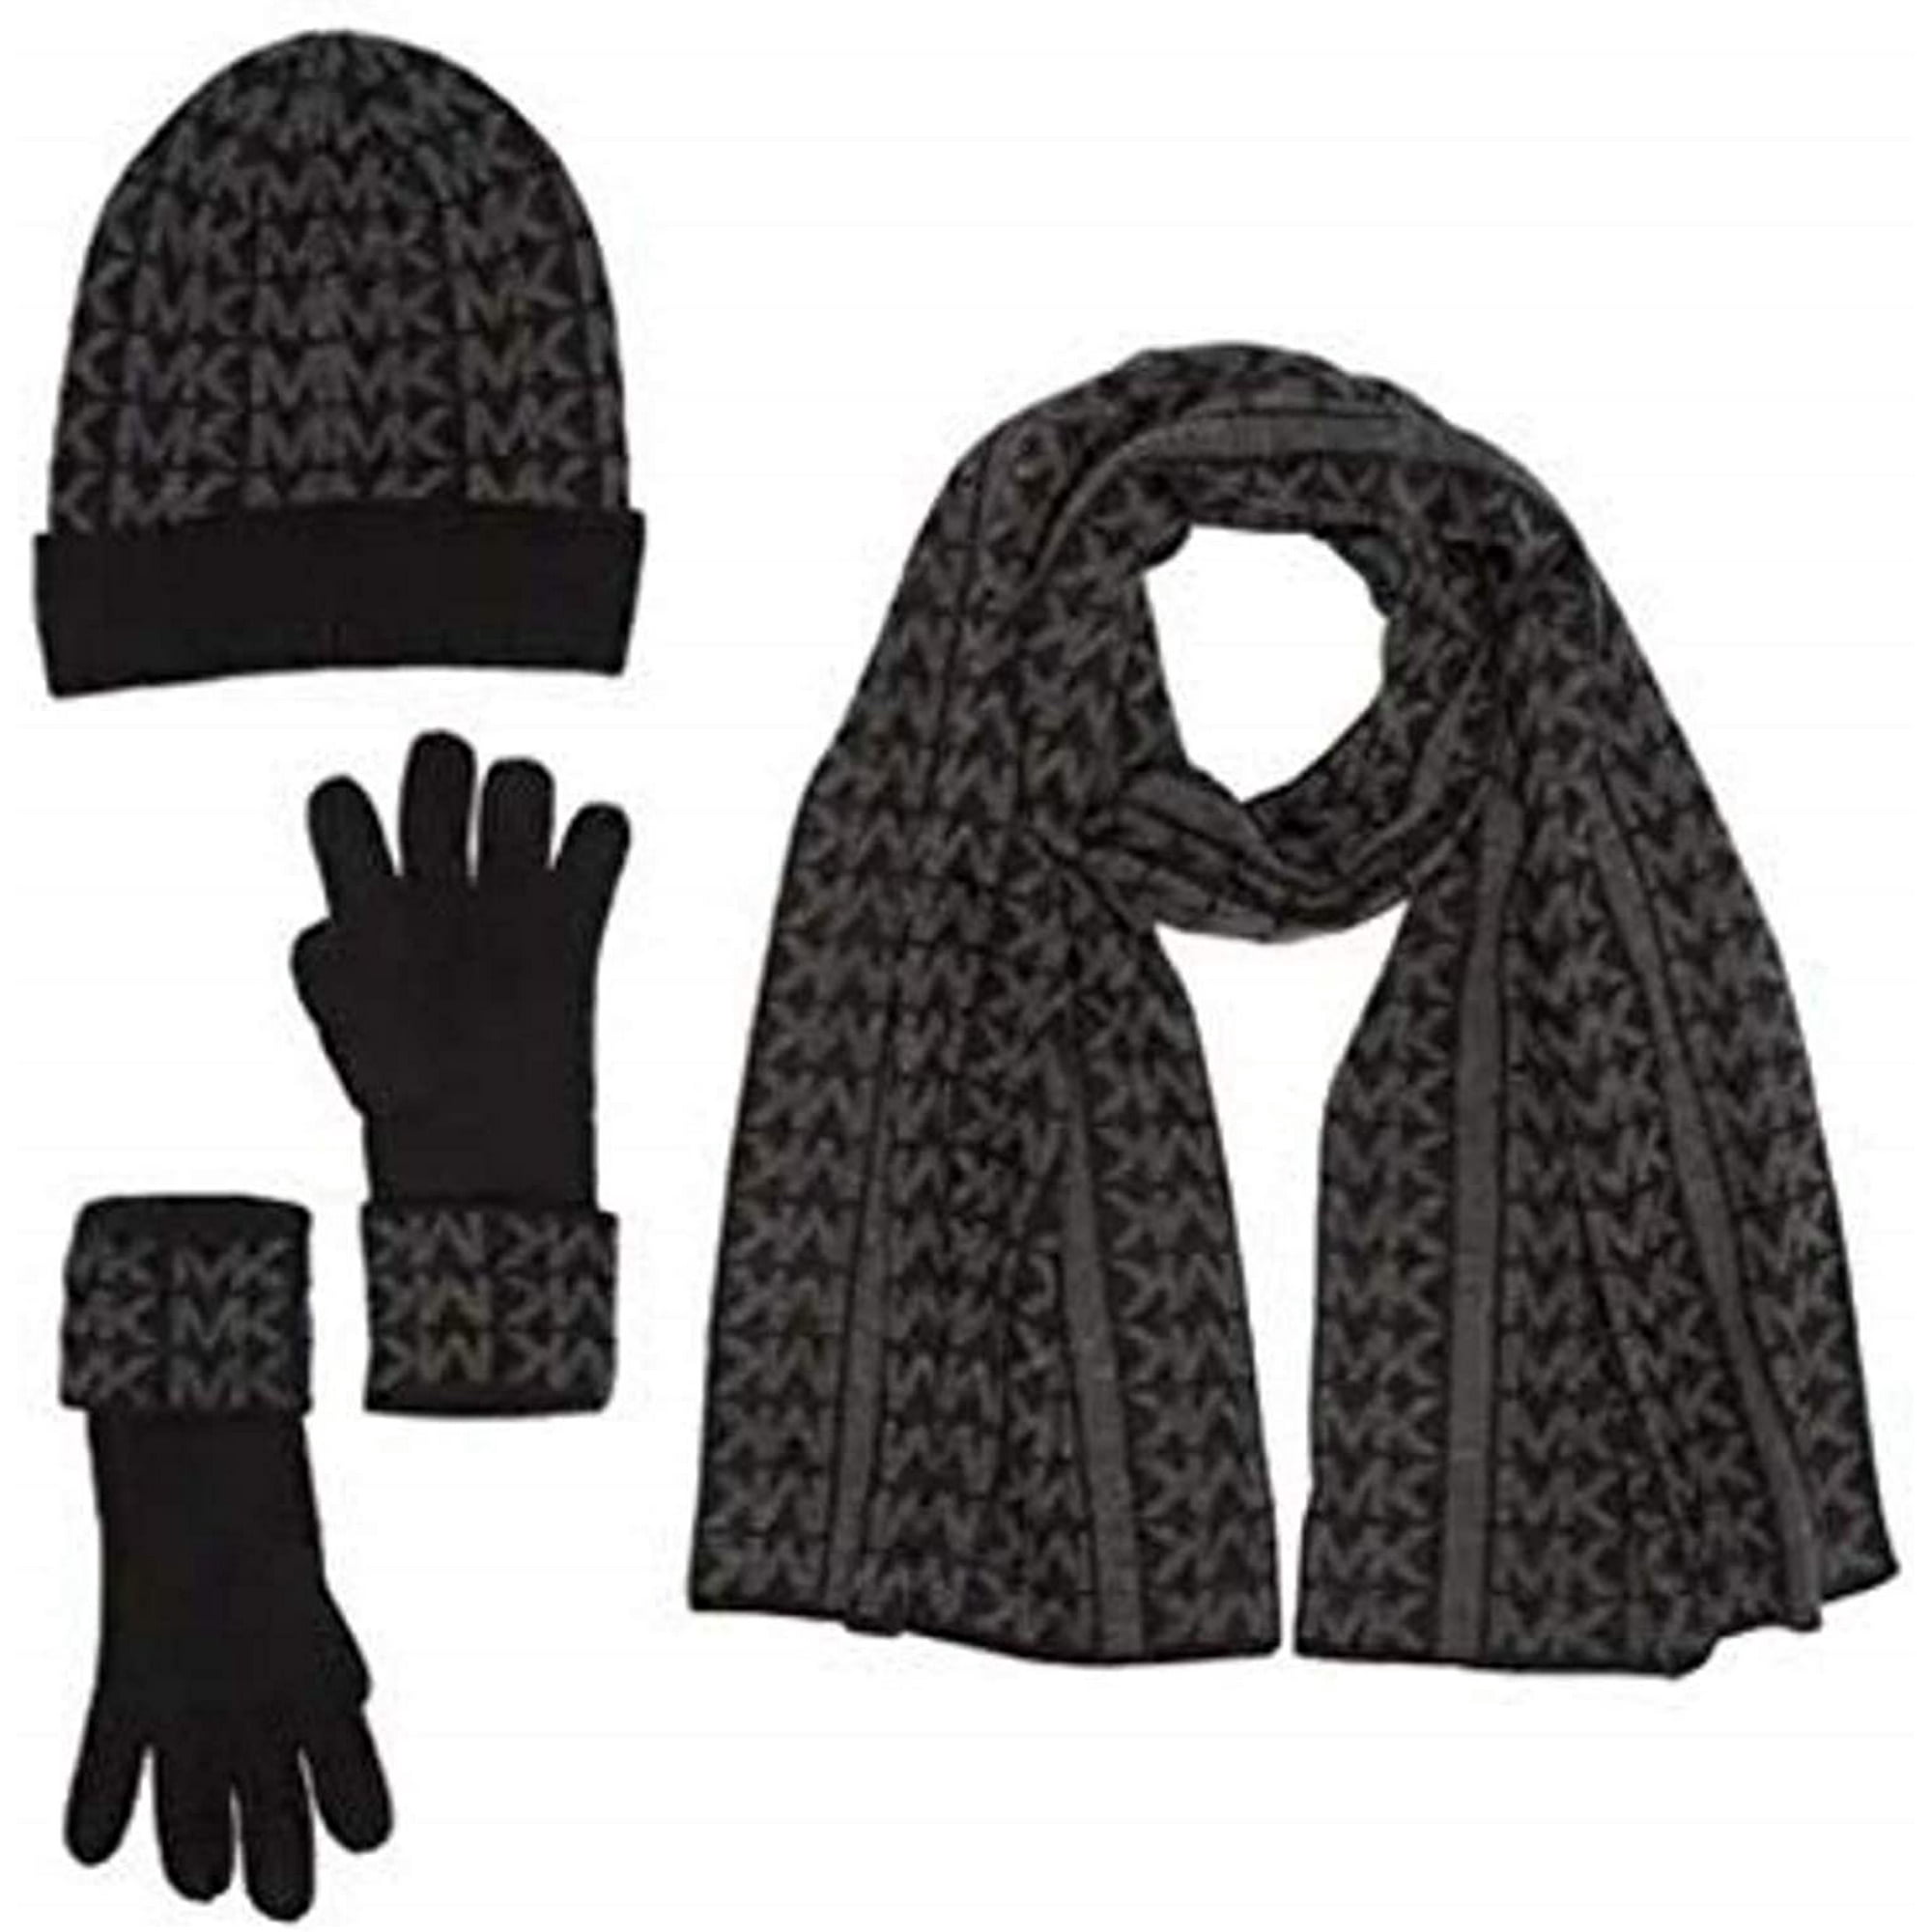 Michael Kors Women's Scarf, Hat, Glove Set, Black/Grey | Walmart Canada